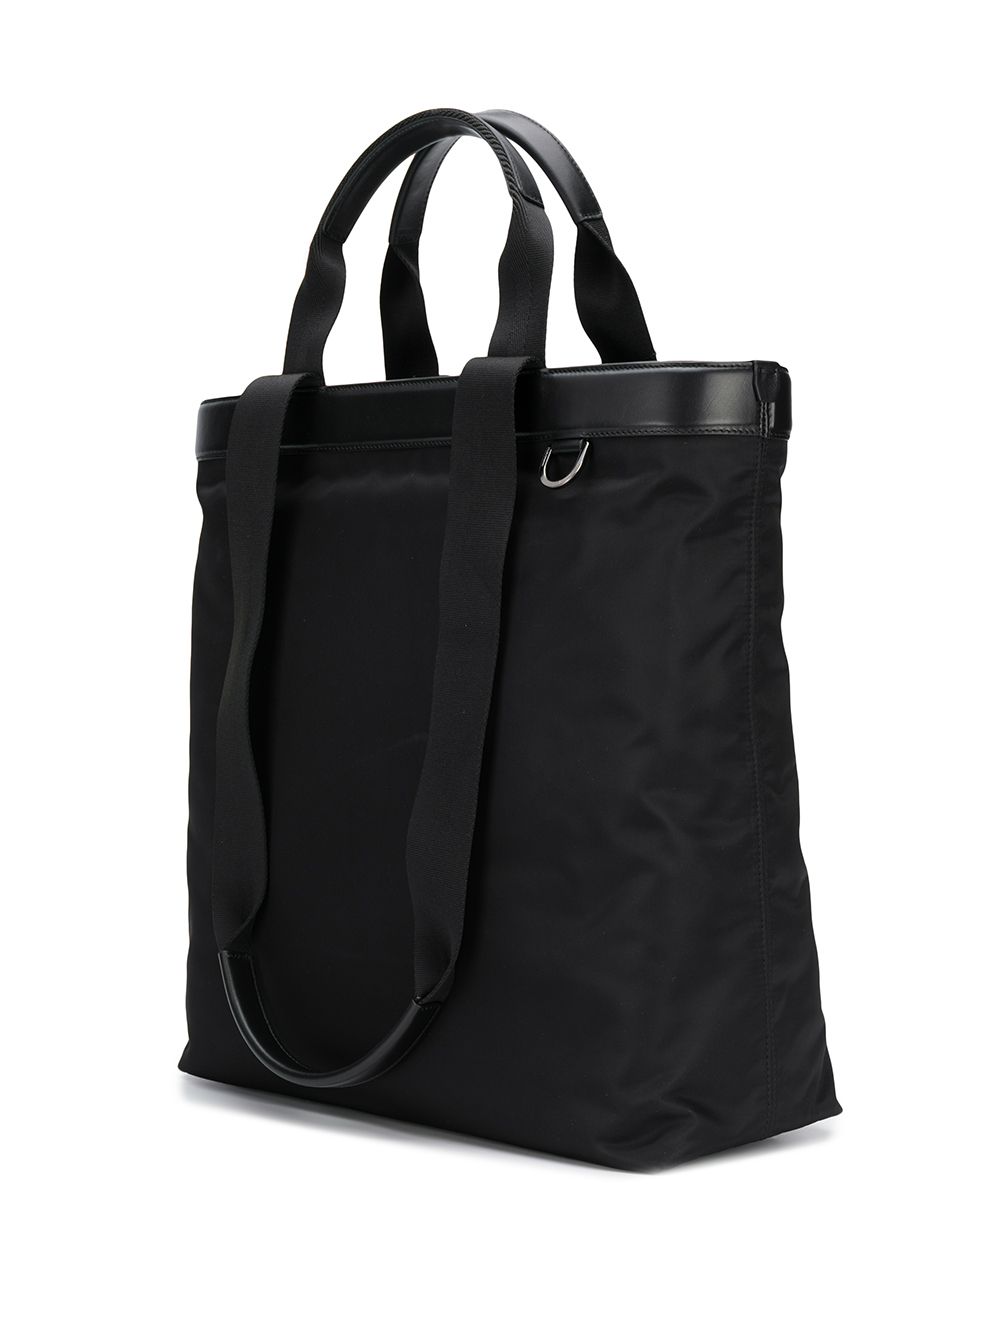 фото Dolce & gabbana сумка-шопер с логотипом